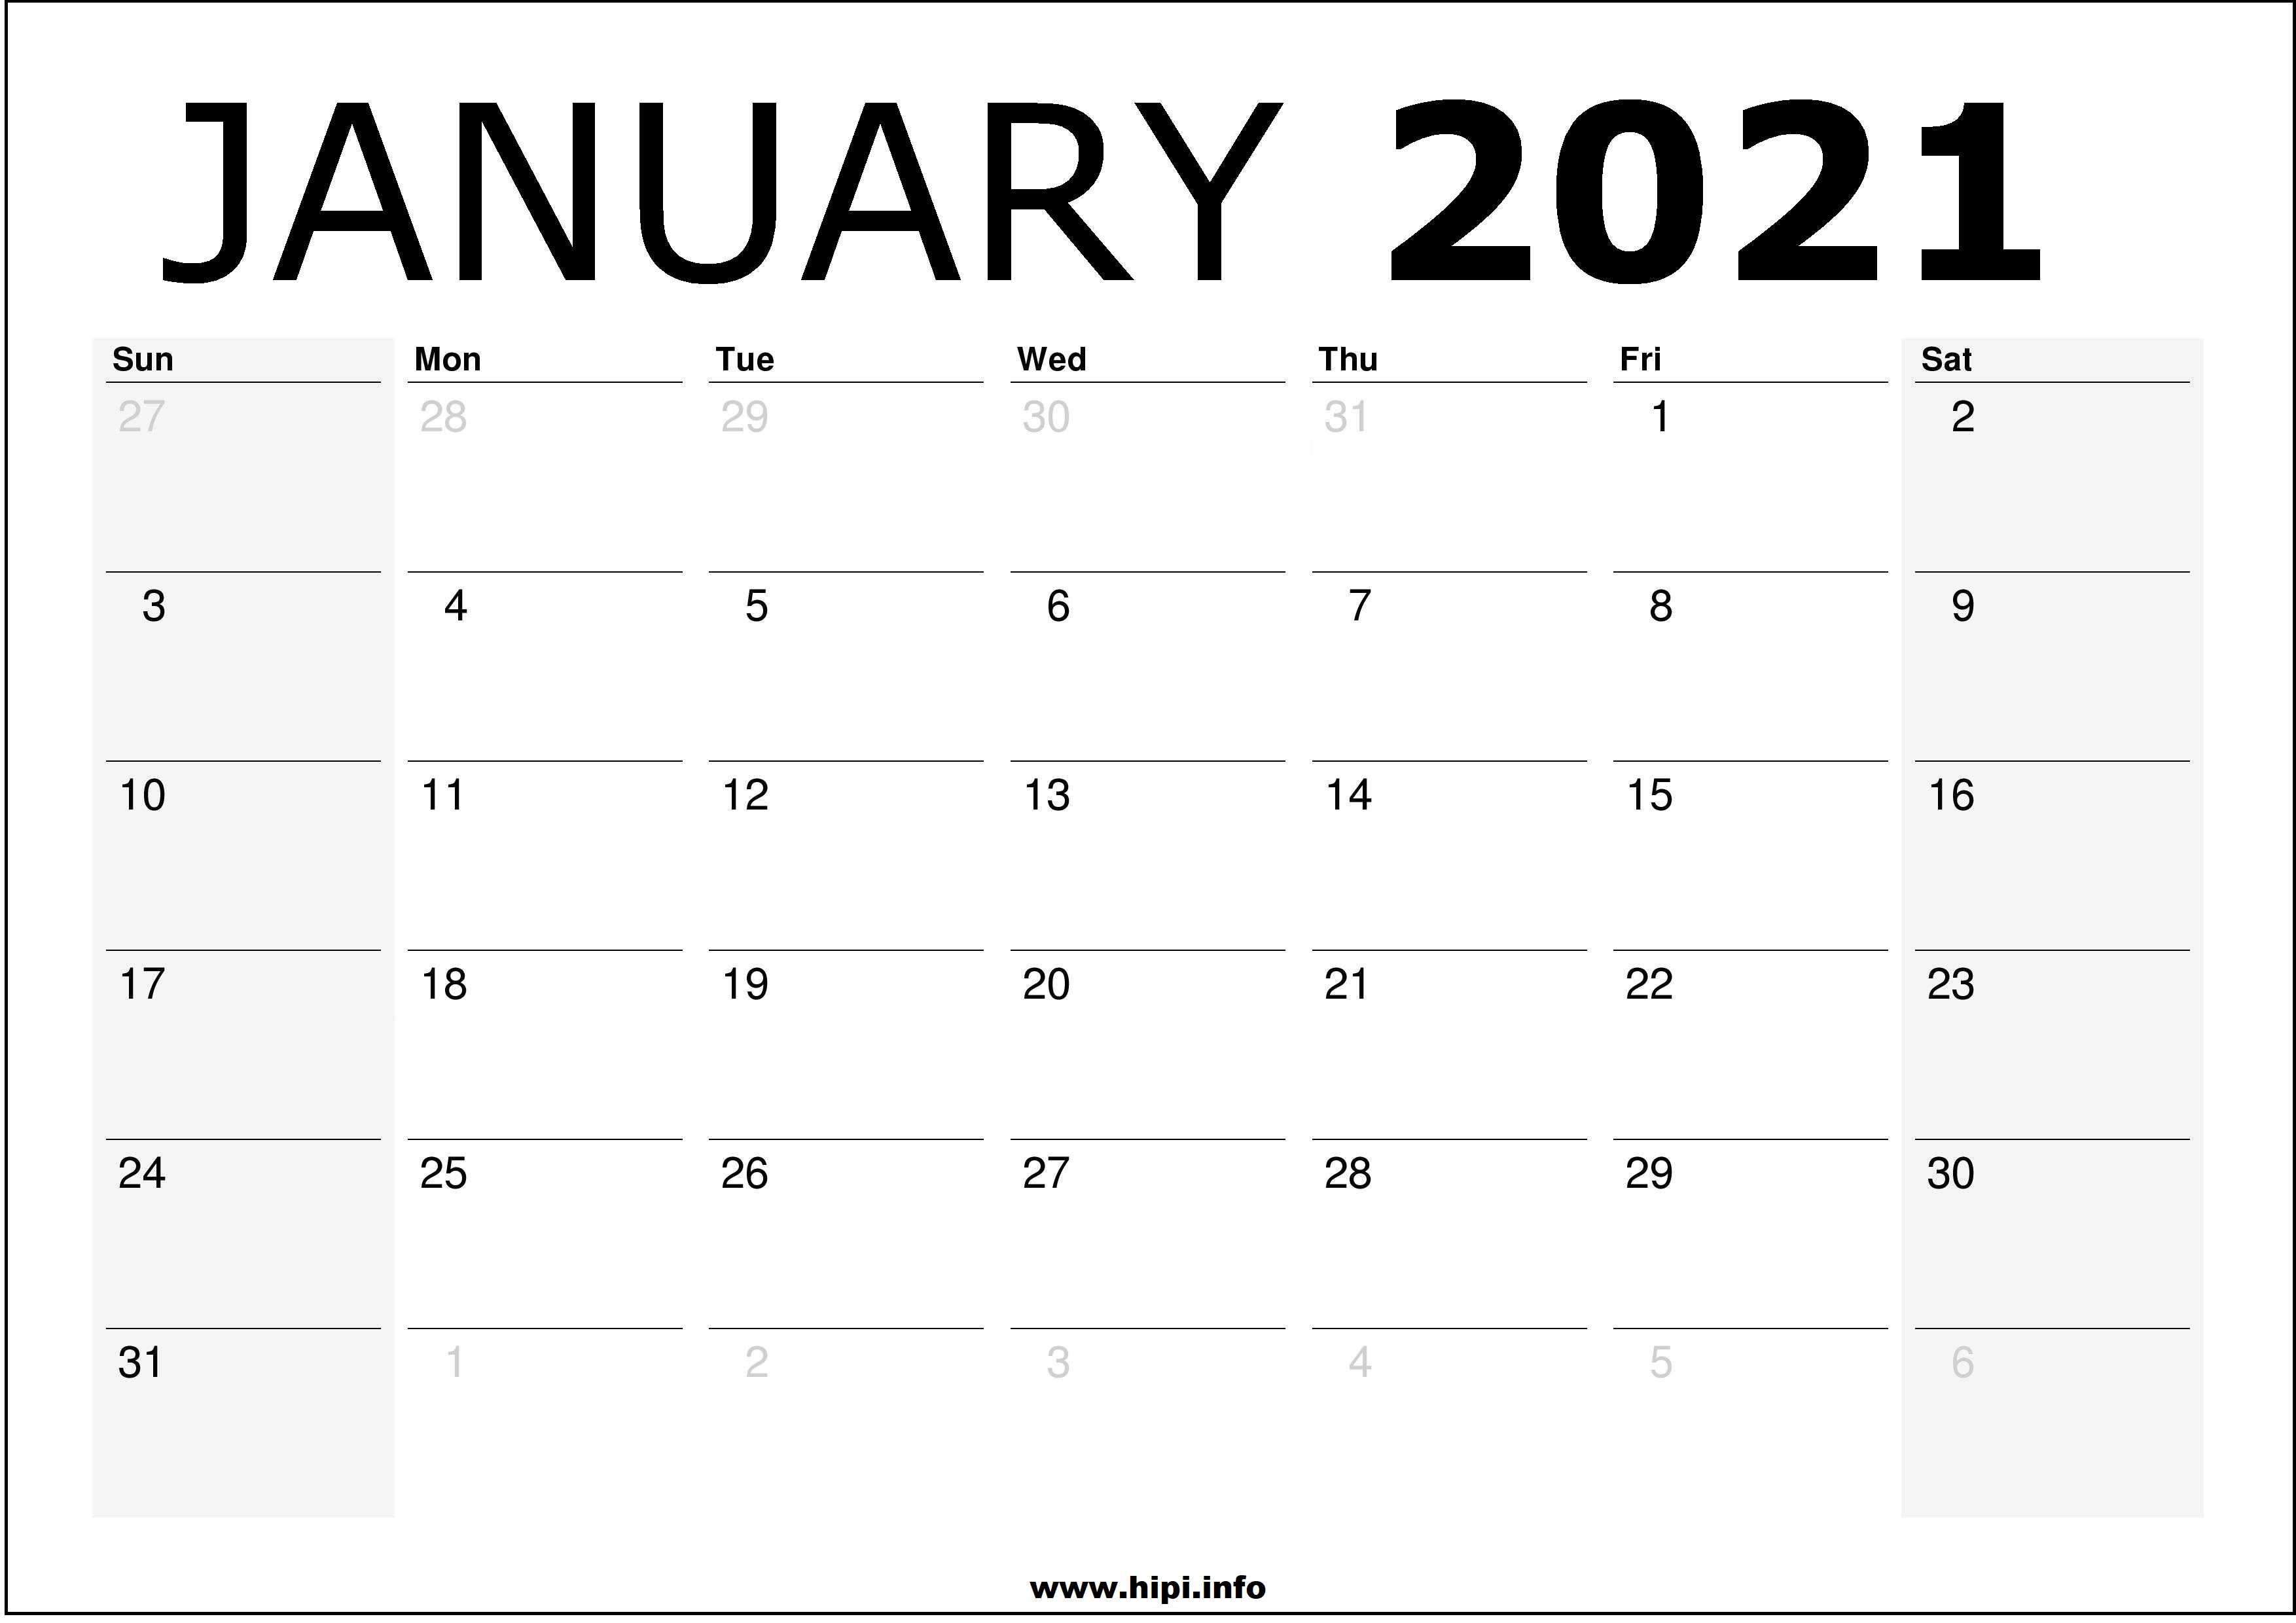 January 2021 Calendar Printable Monthly Calendar Free Download Hipi Info Calendars Printable Free